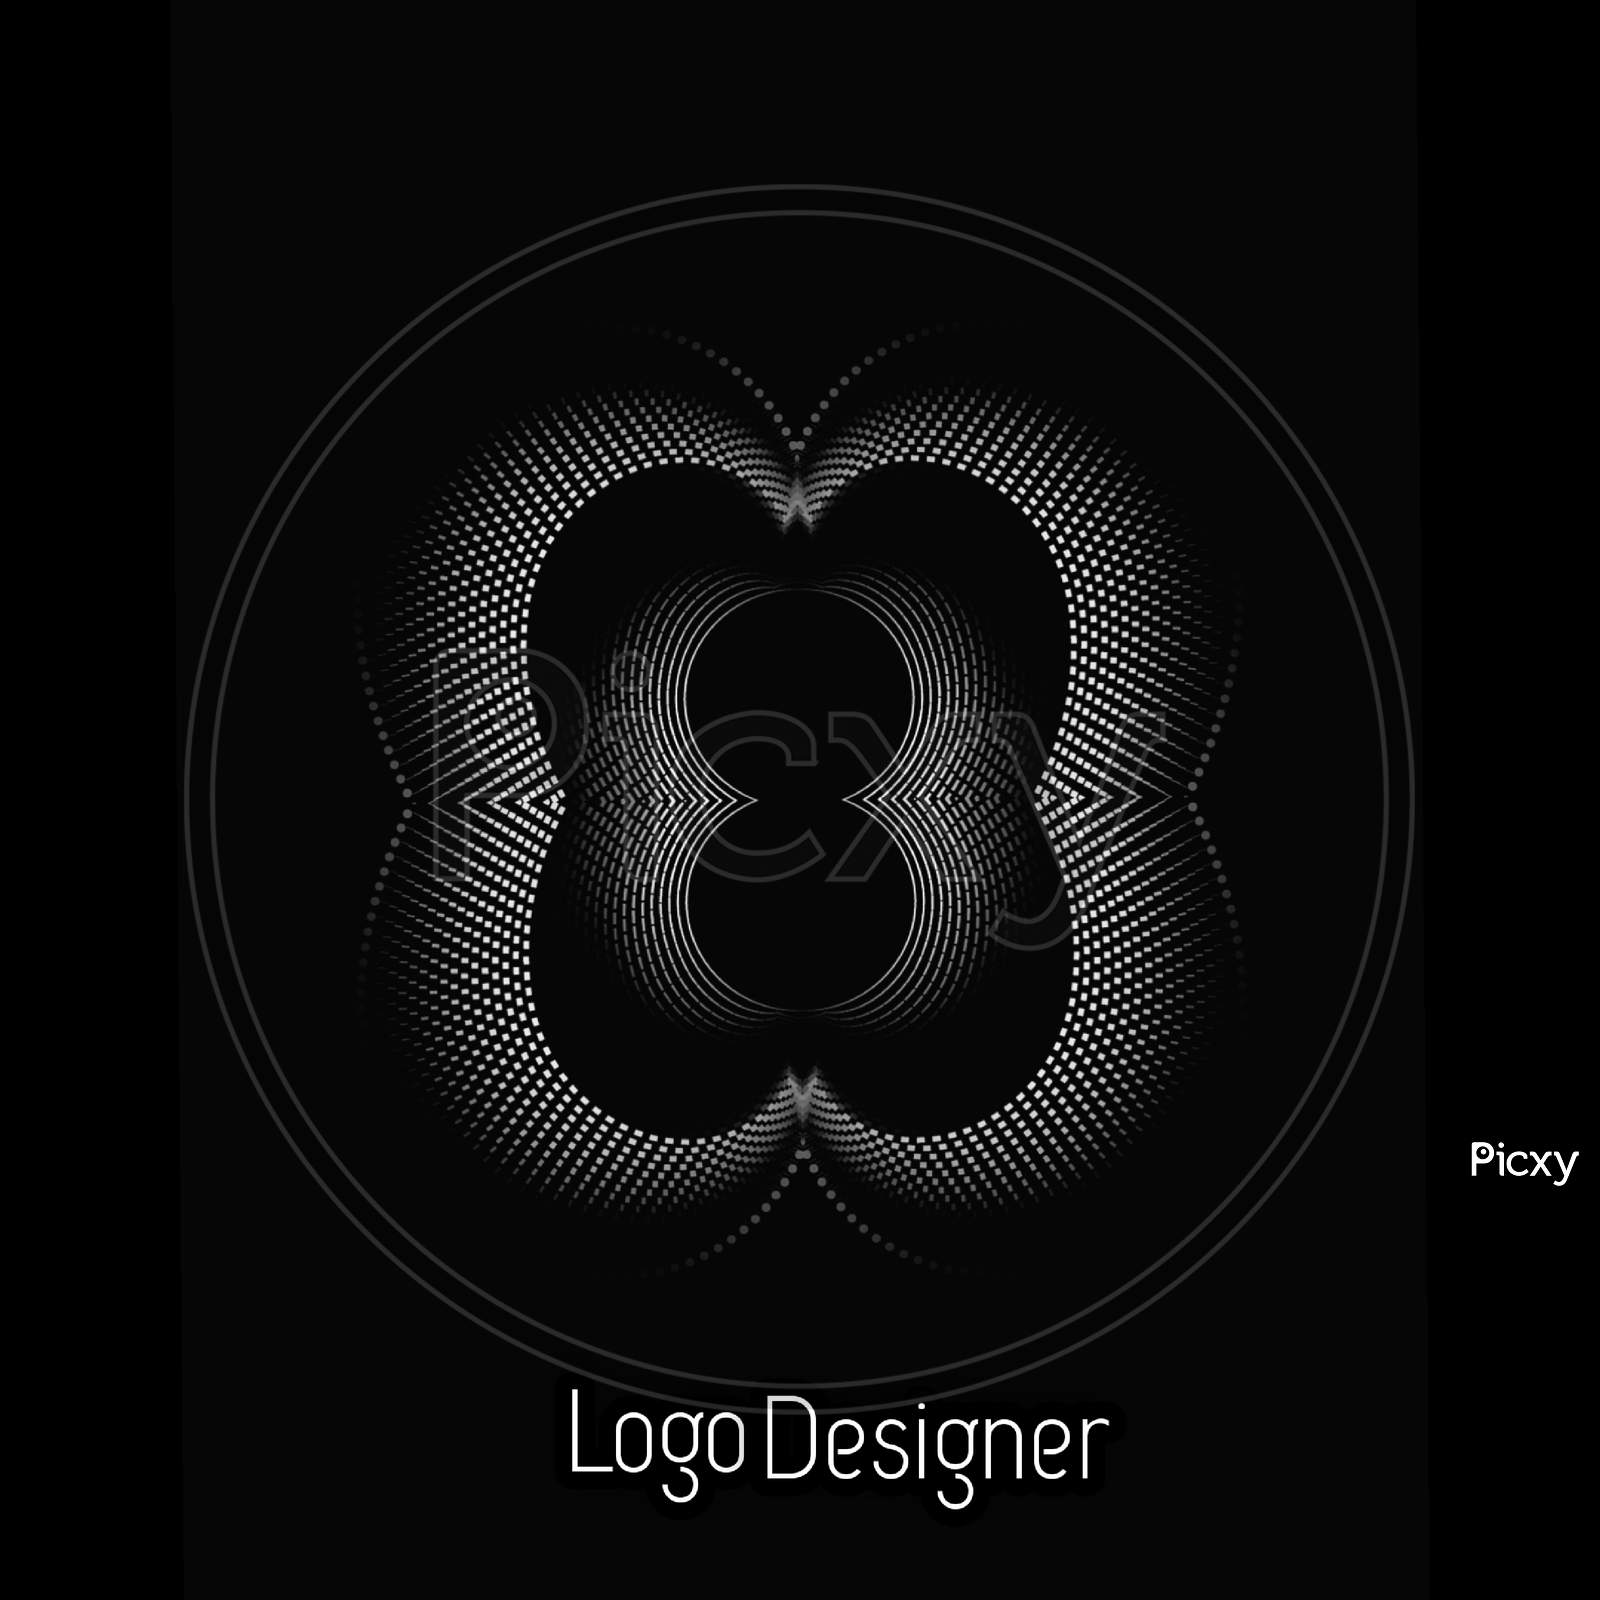 A creative 3d logo design background